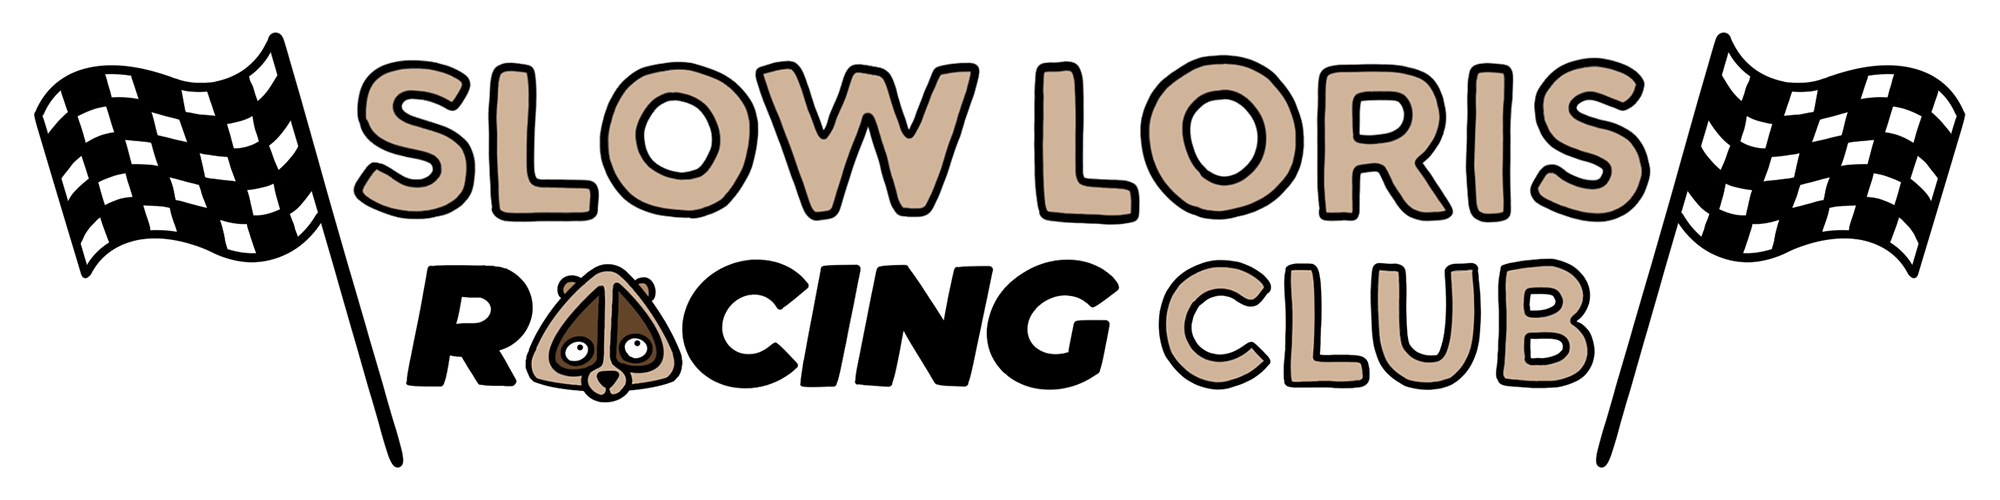 Slow Loris Racing Club logo